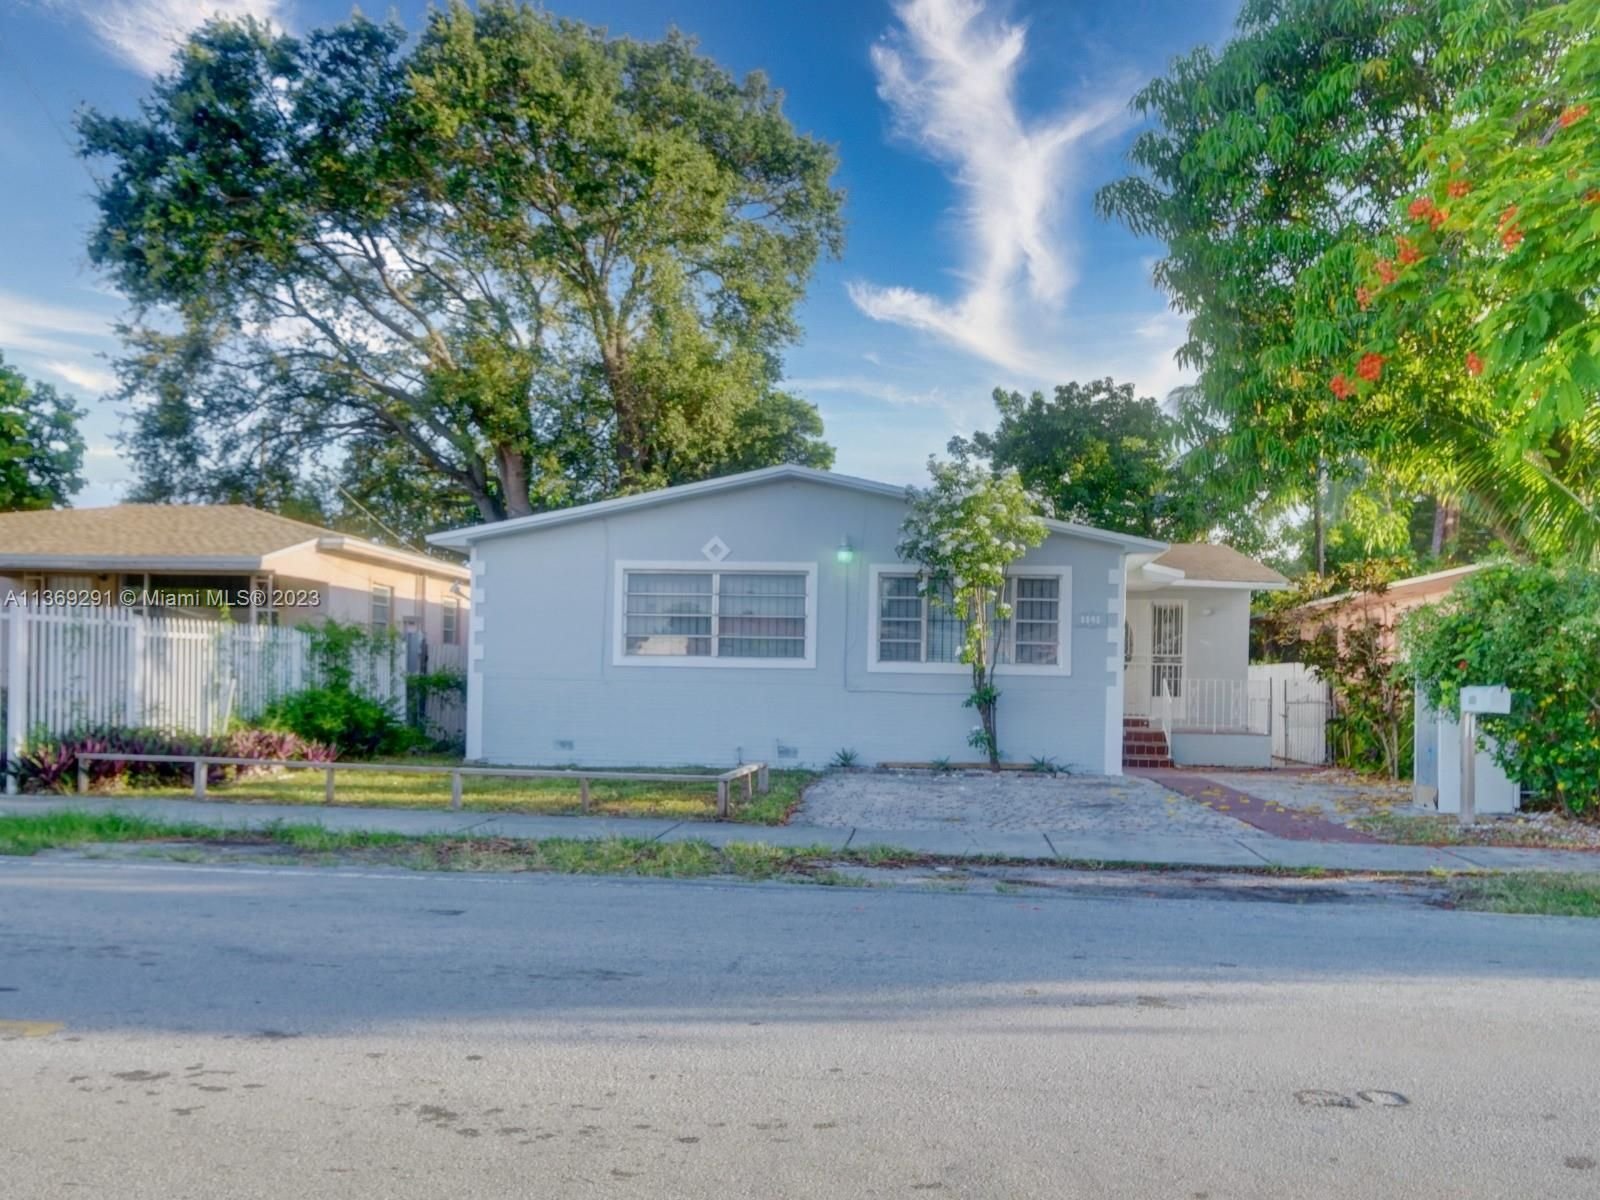 Real estate property located at 1141 75th St, Miami-Dade County, Miami, FL